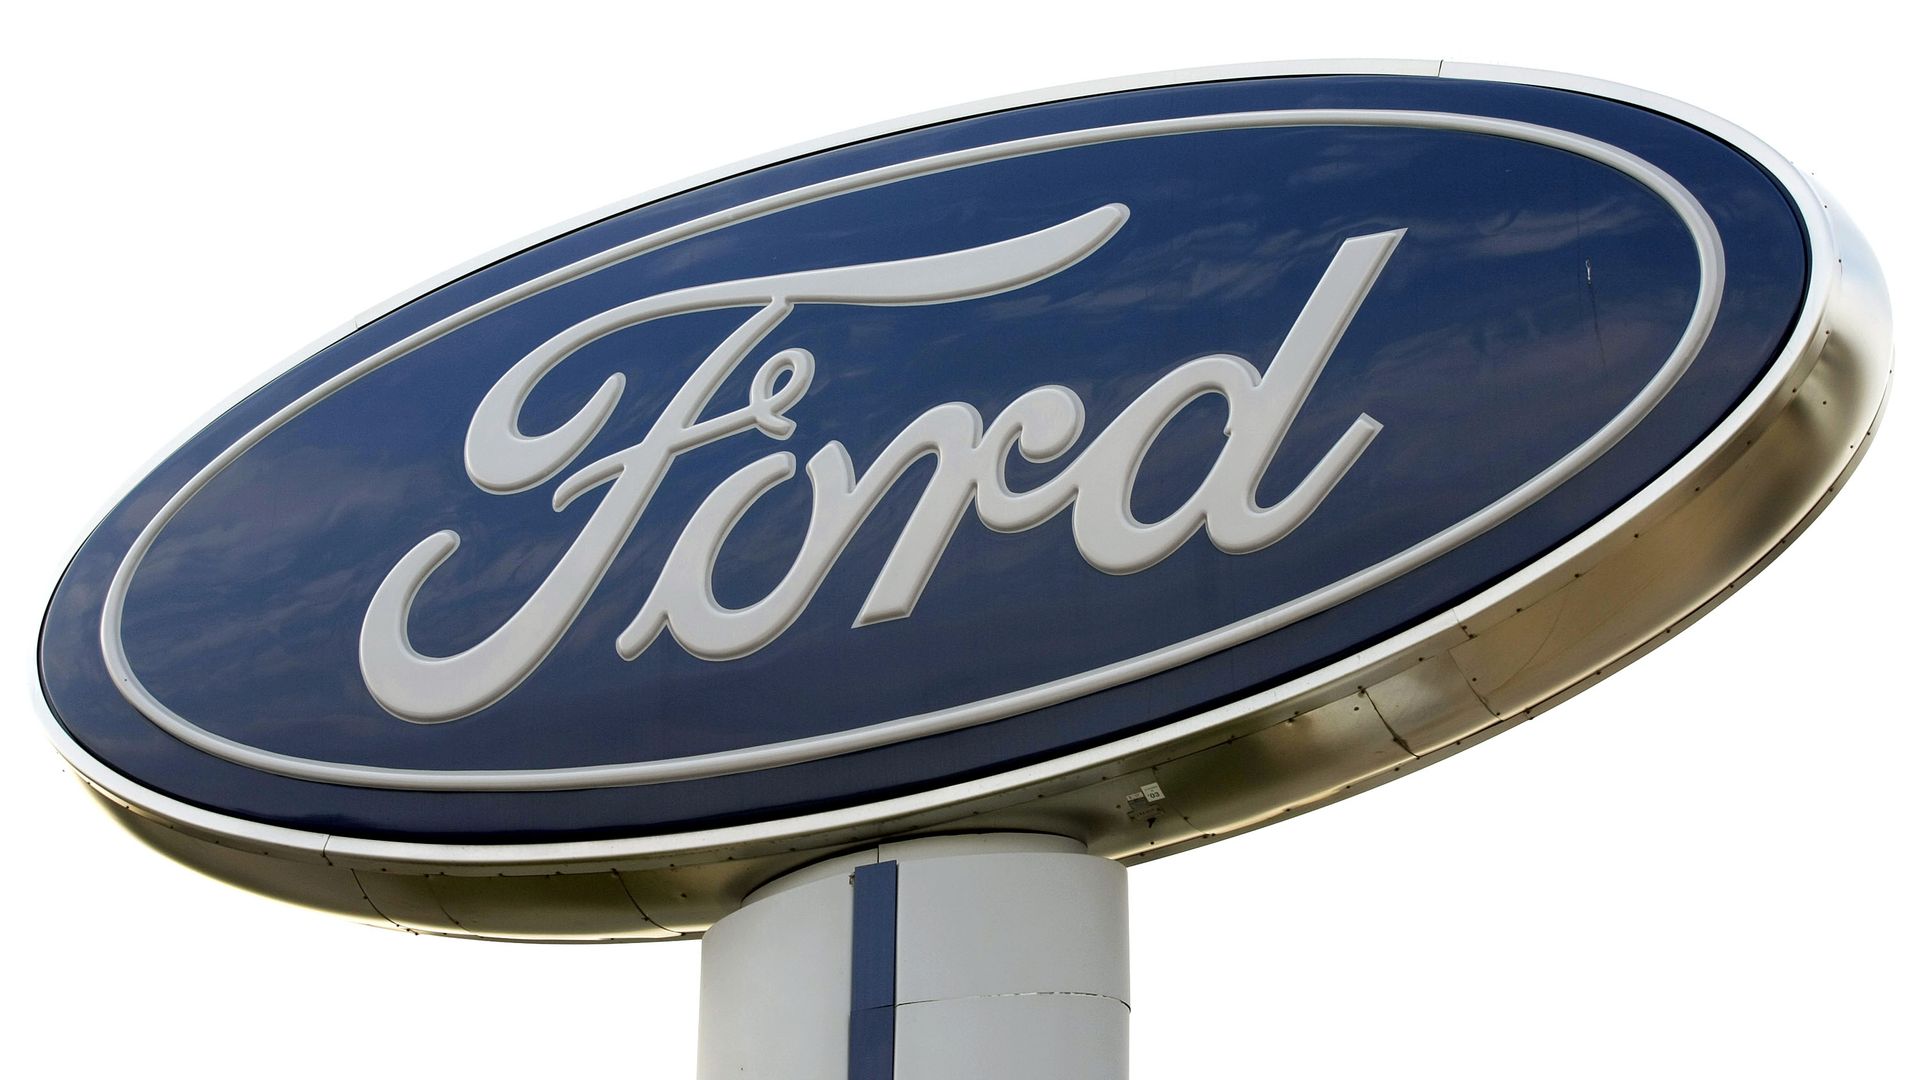 Ford logo sign